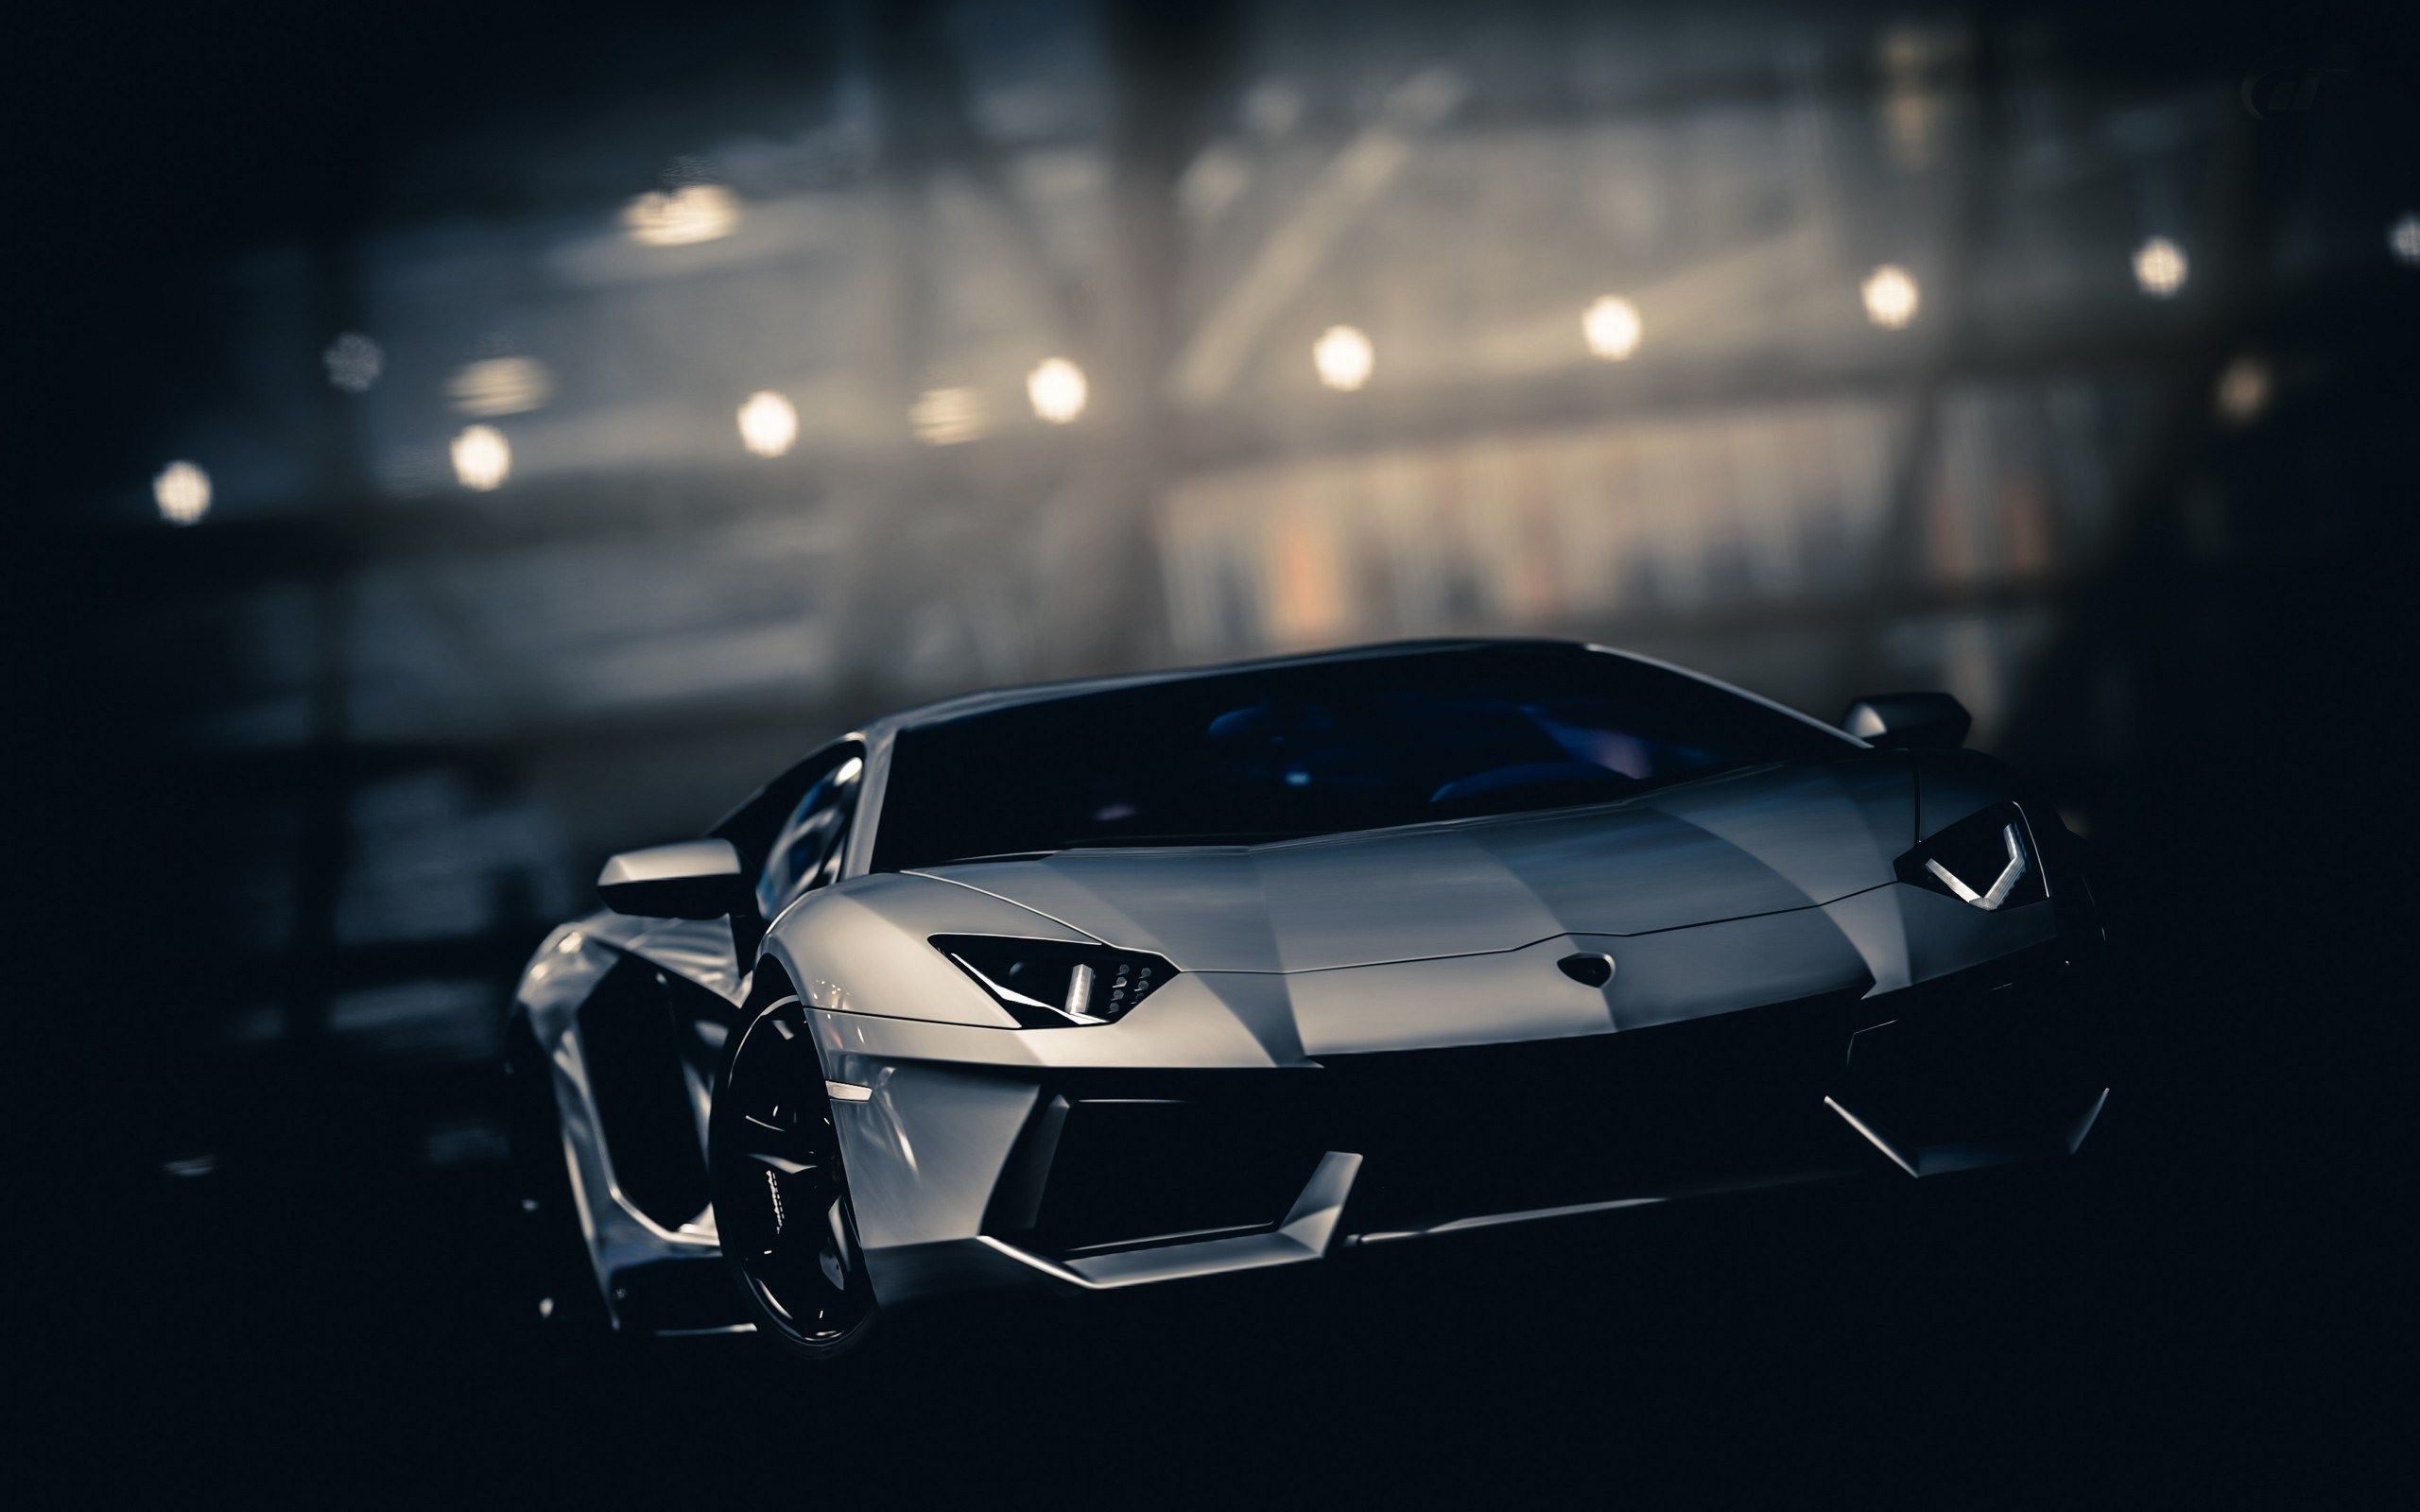 2560x1600 Lamborghini Huracan HD wallpaper for iPhone Exotic car hd iPhone